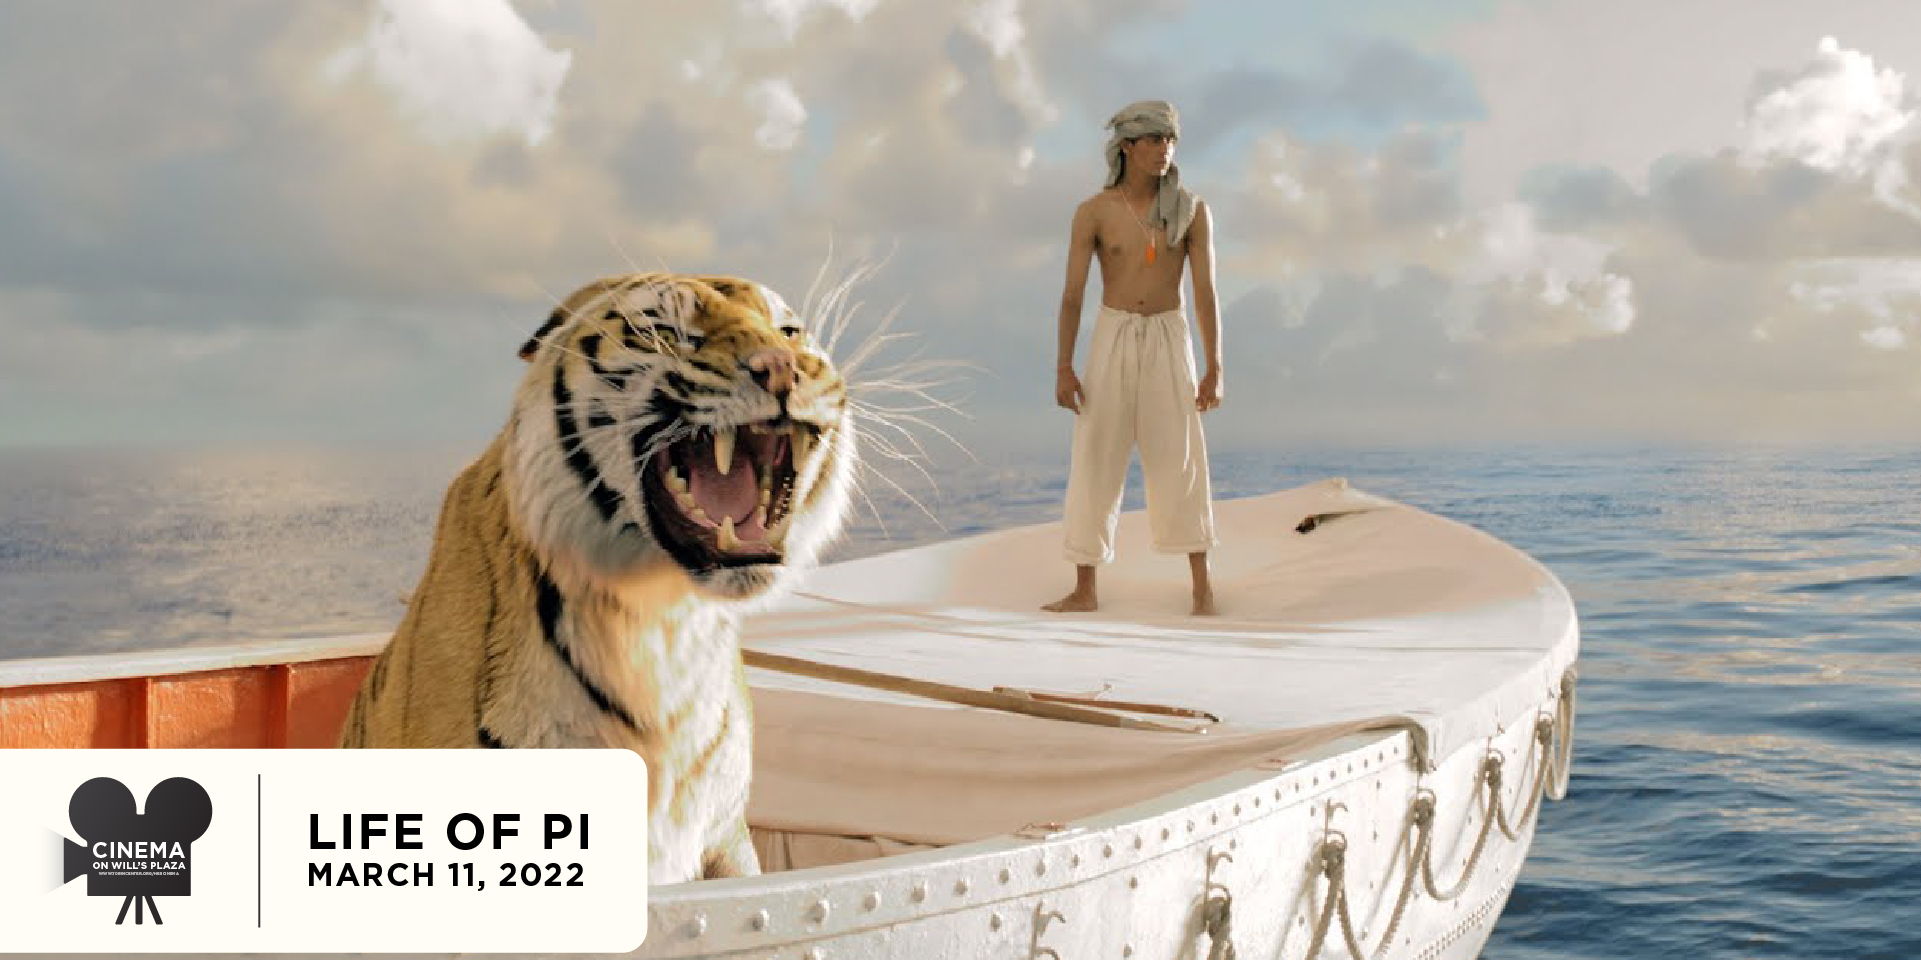 Cinema on Will's Plaza | Life of Pi  promotional image